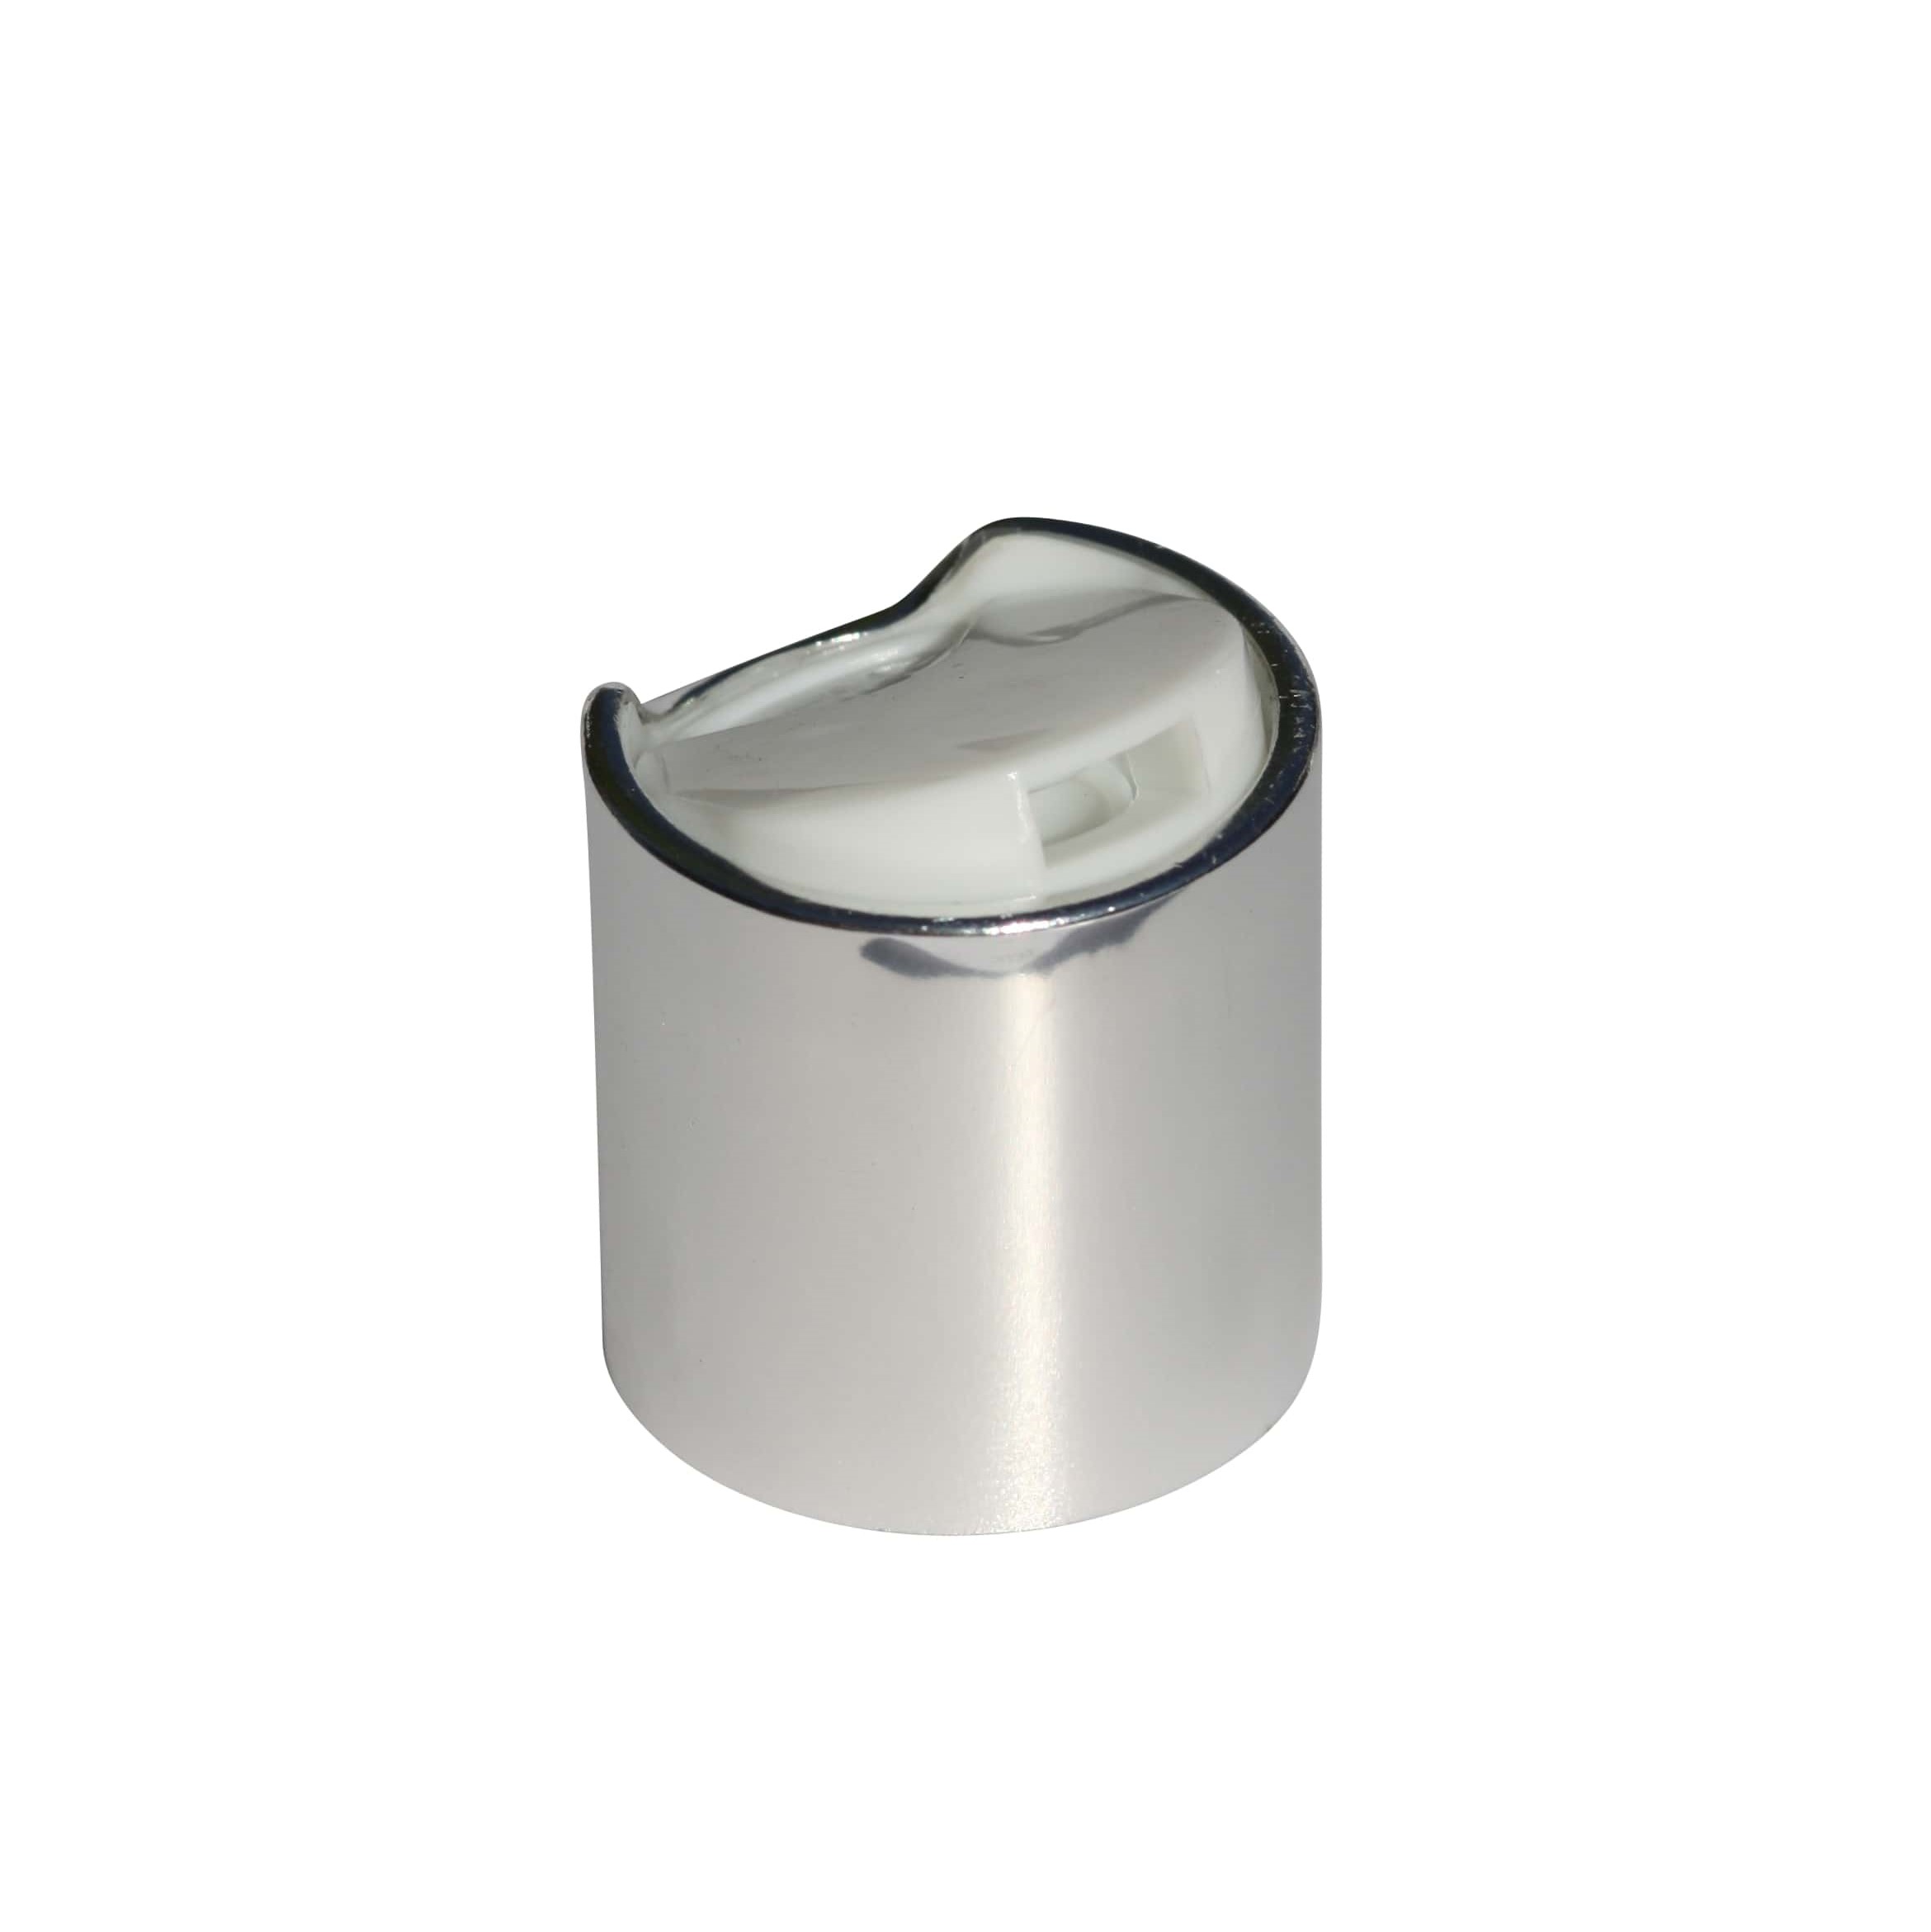 Šroubovací uzávěr Disc Top, plast PP, stříbrný, pro ústí: GPI 24/410